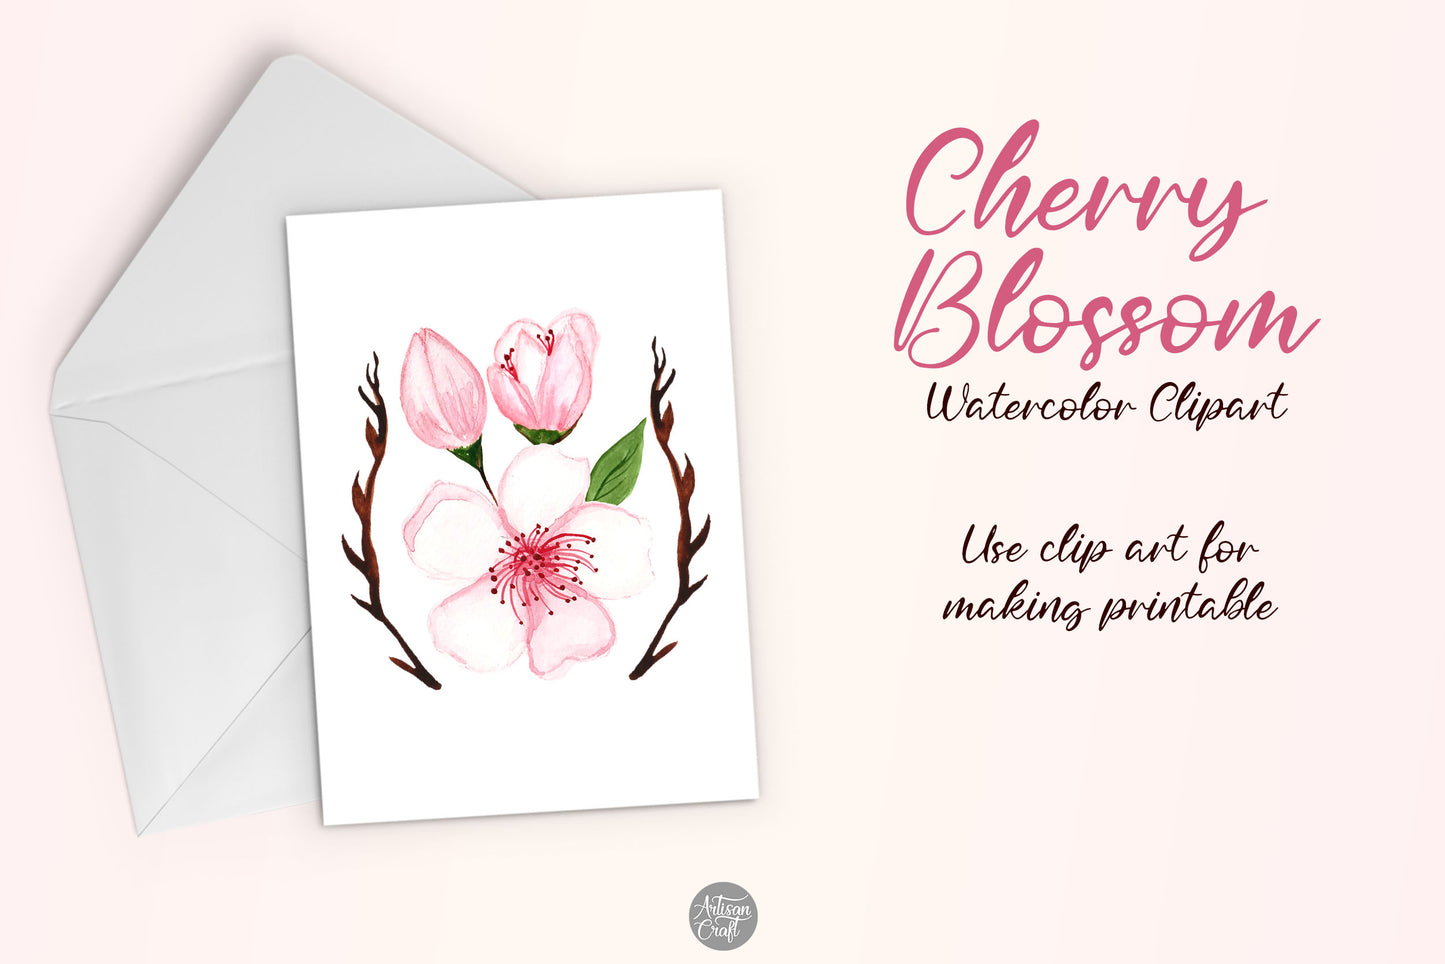 Cherry blossom watercolor clipart